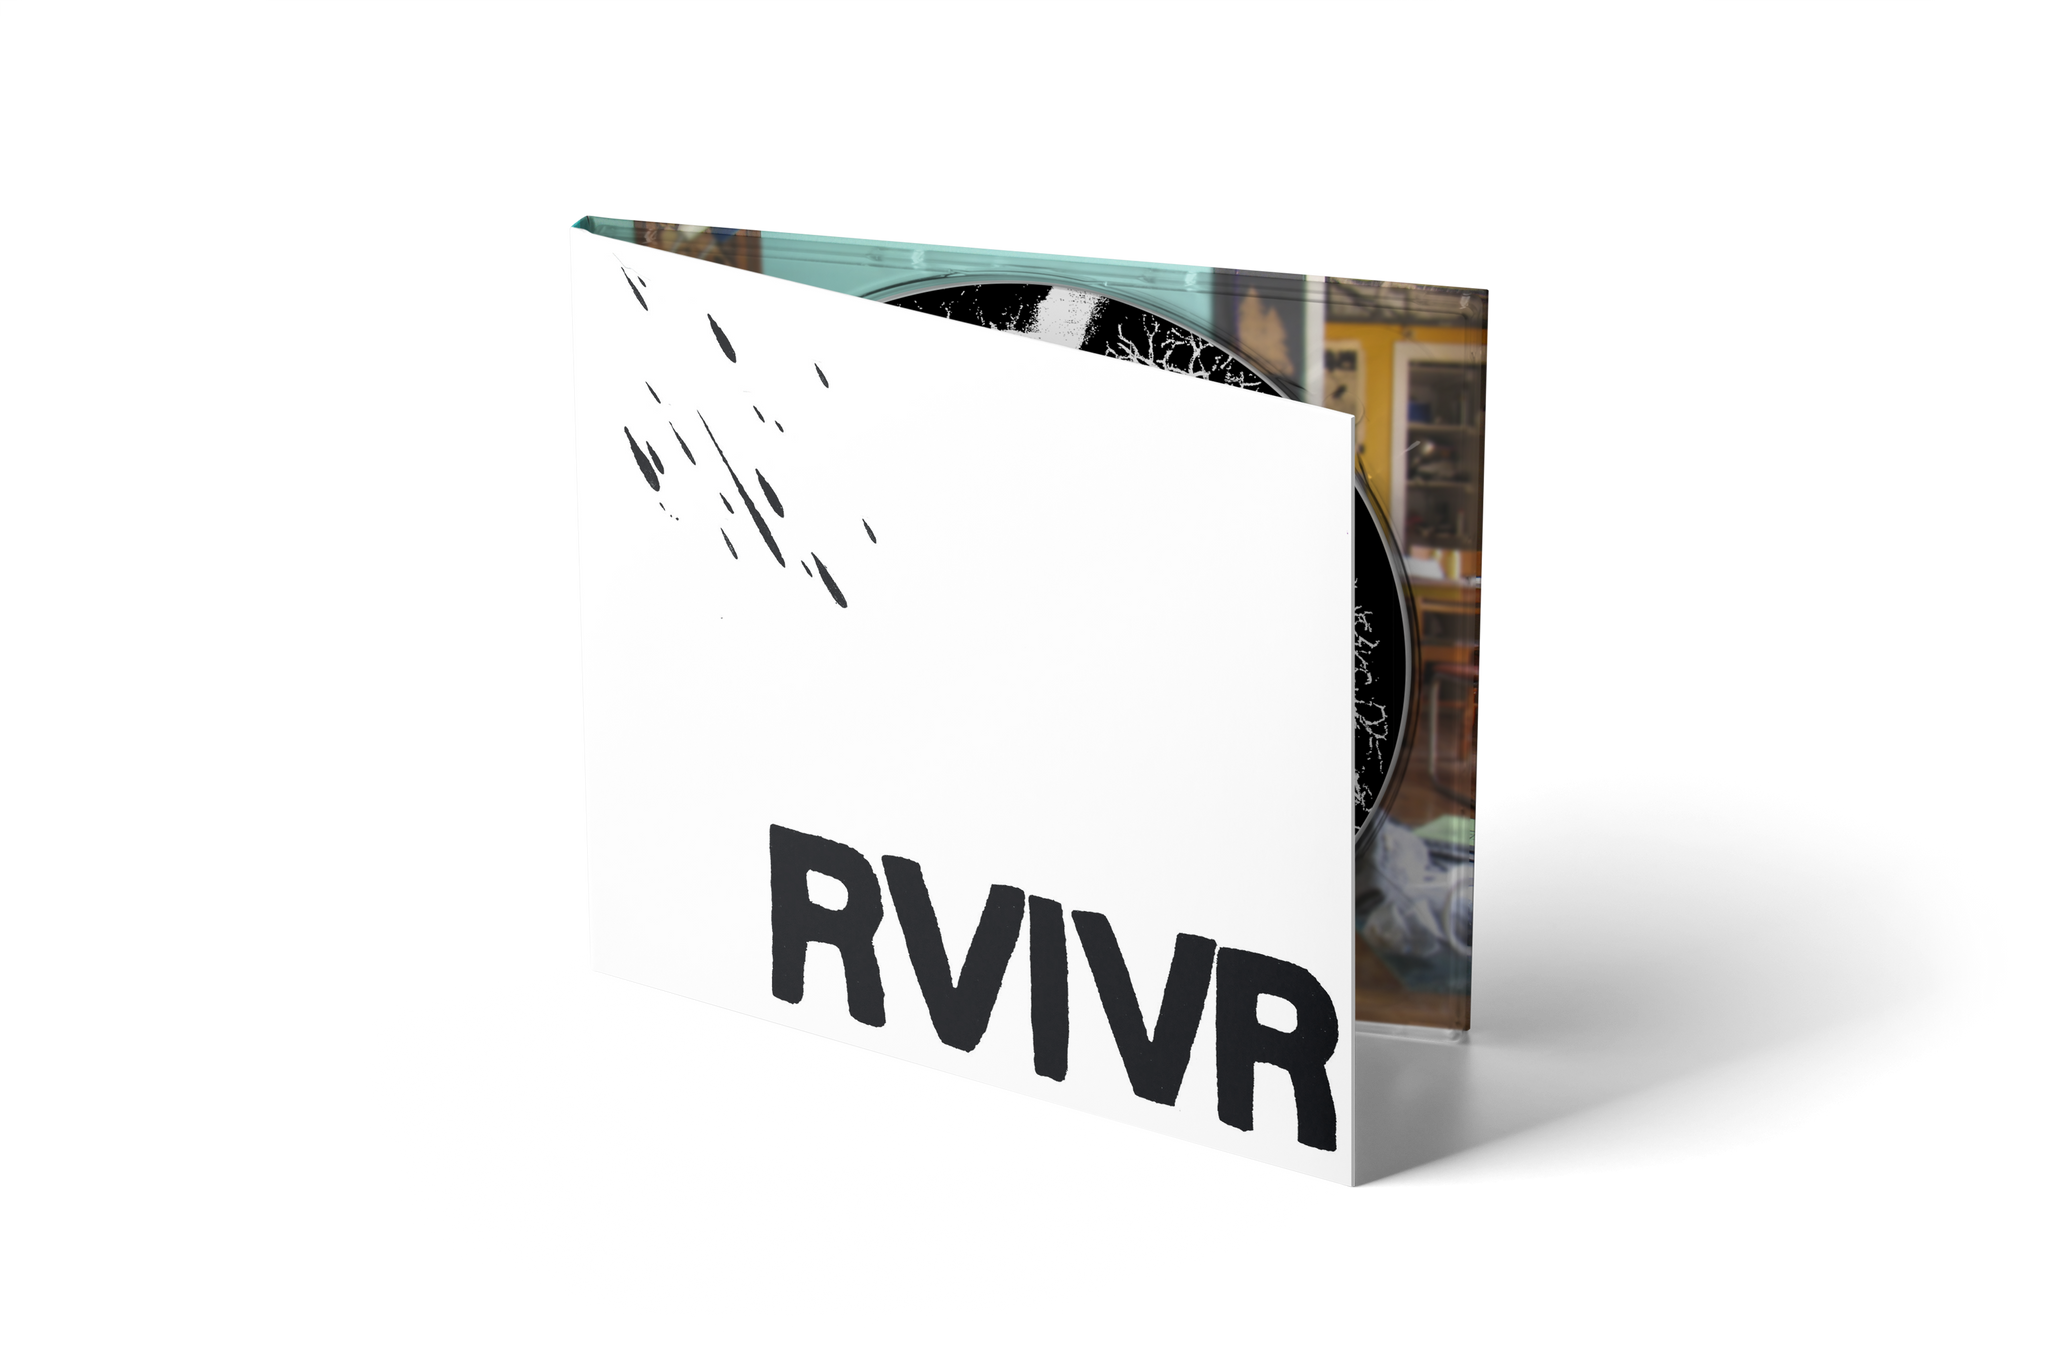 RVIVR "RVIVR" CD